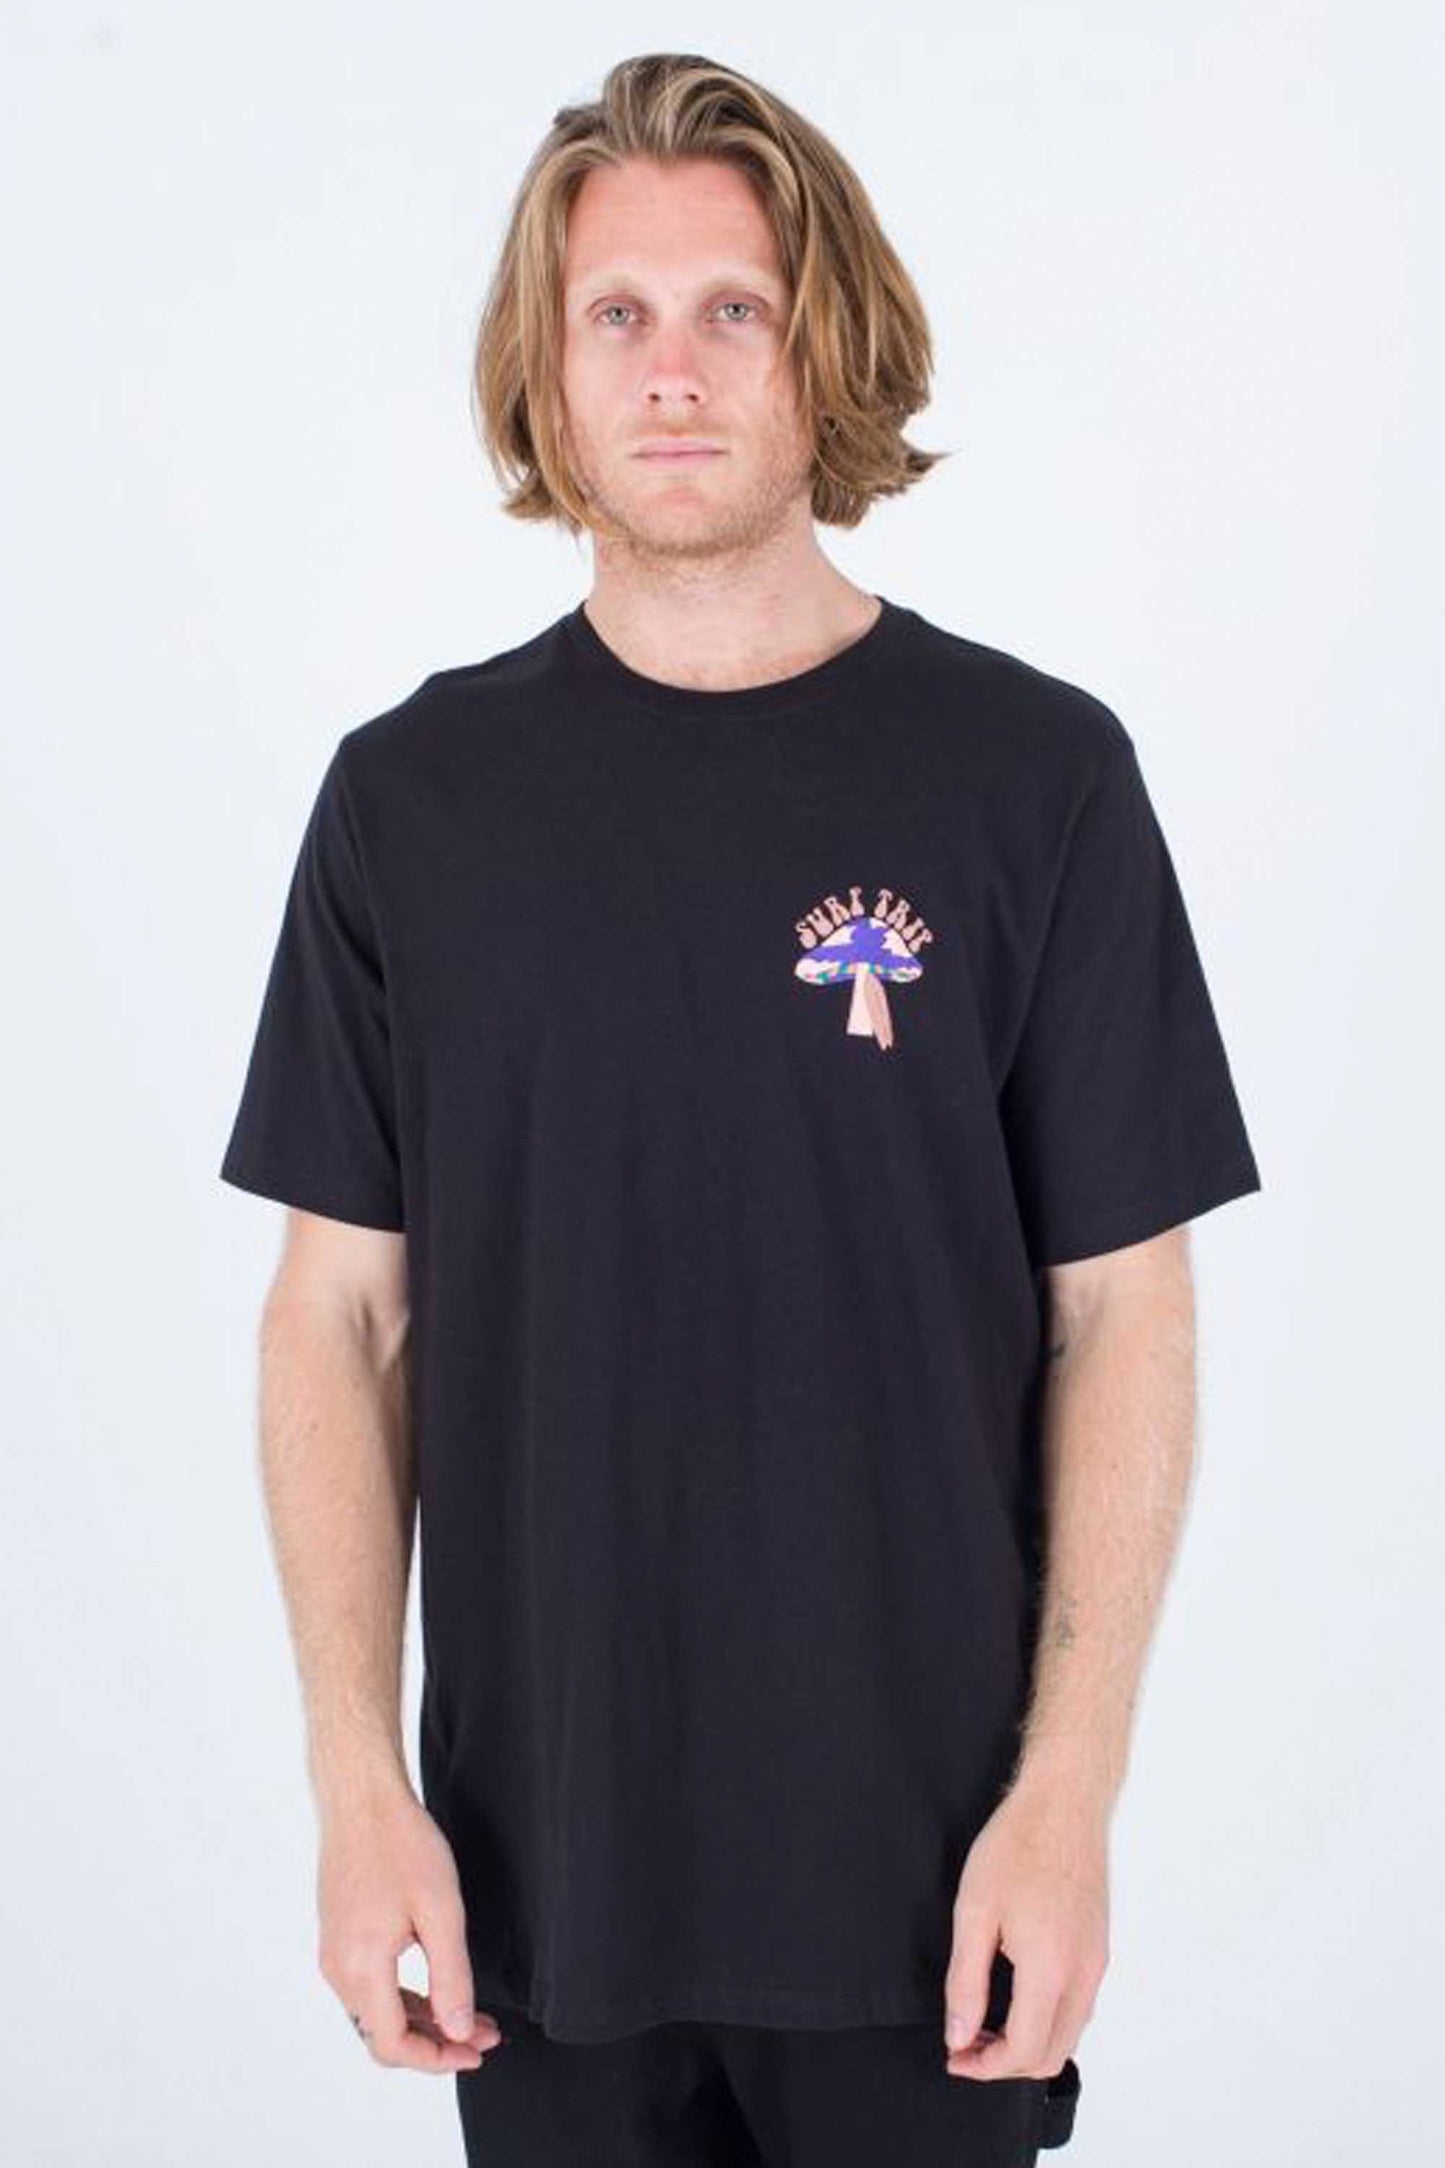 Hurley Lids Surfer T Shirt Unisex Mens L Waves Surfing Beach Graphic